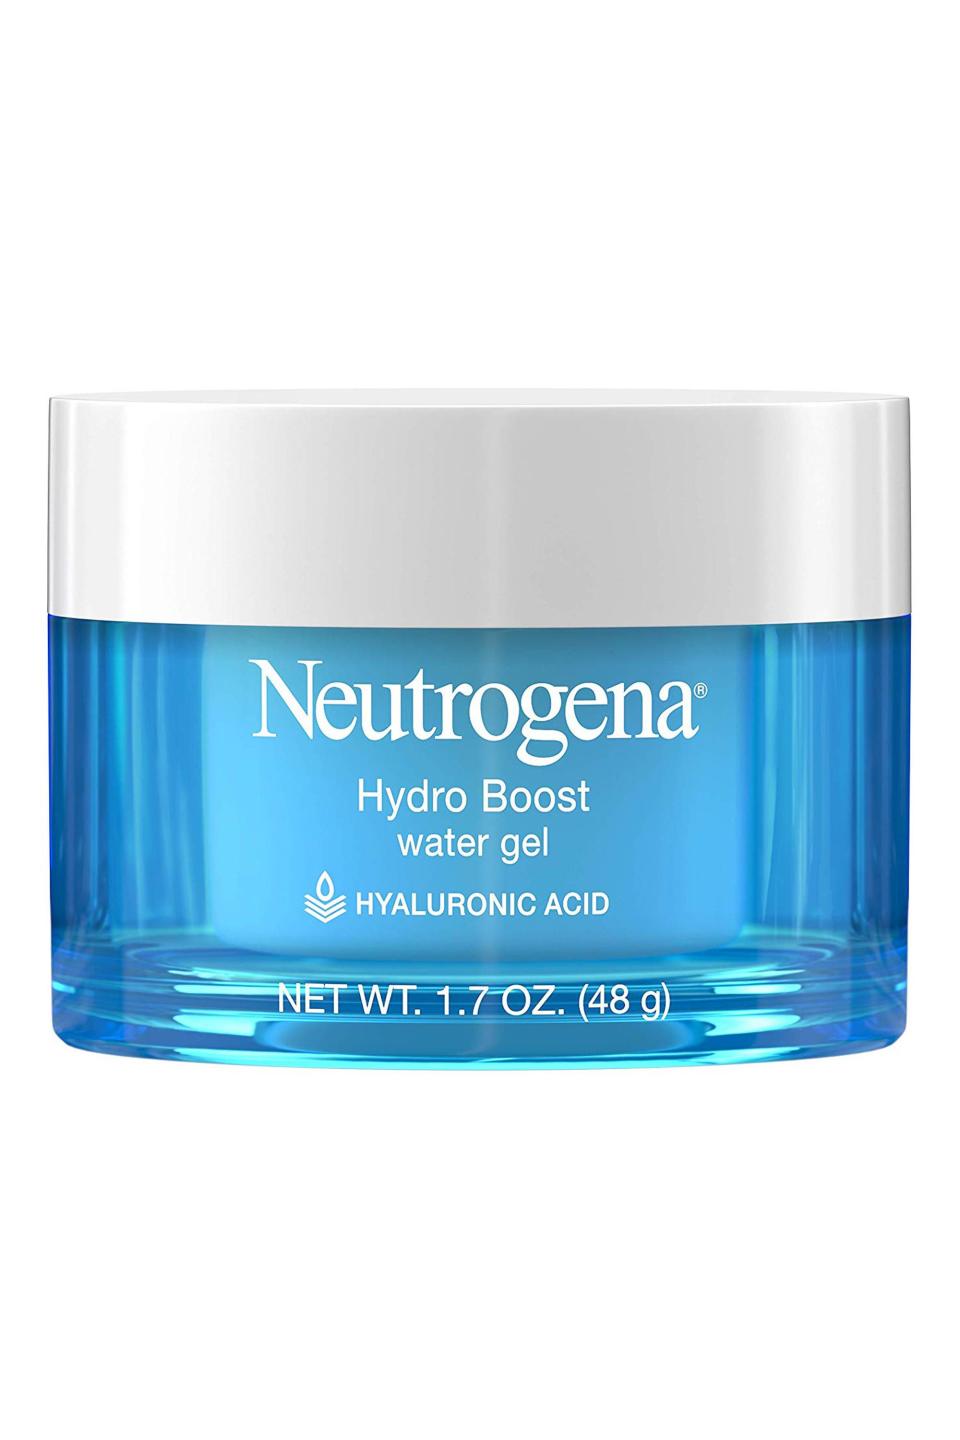 14) Neutrogena Hydro Boost Hyaluronic Acid Hydrating Water Face Gel Moisturizer for Dry Skin